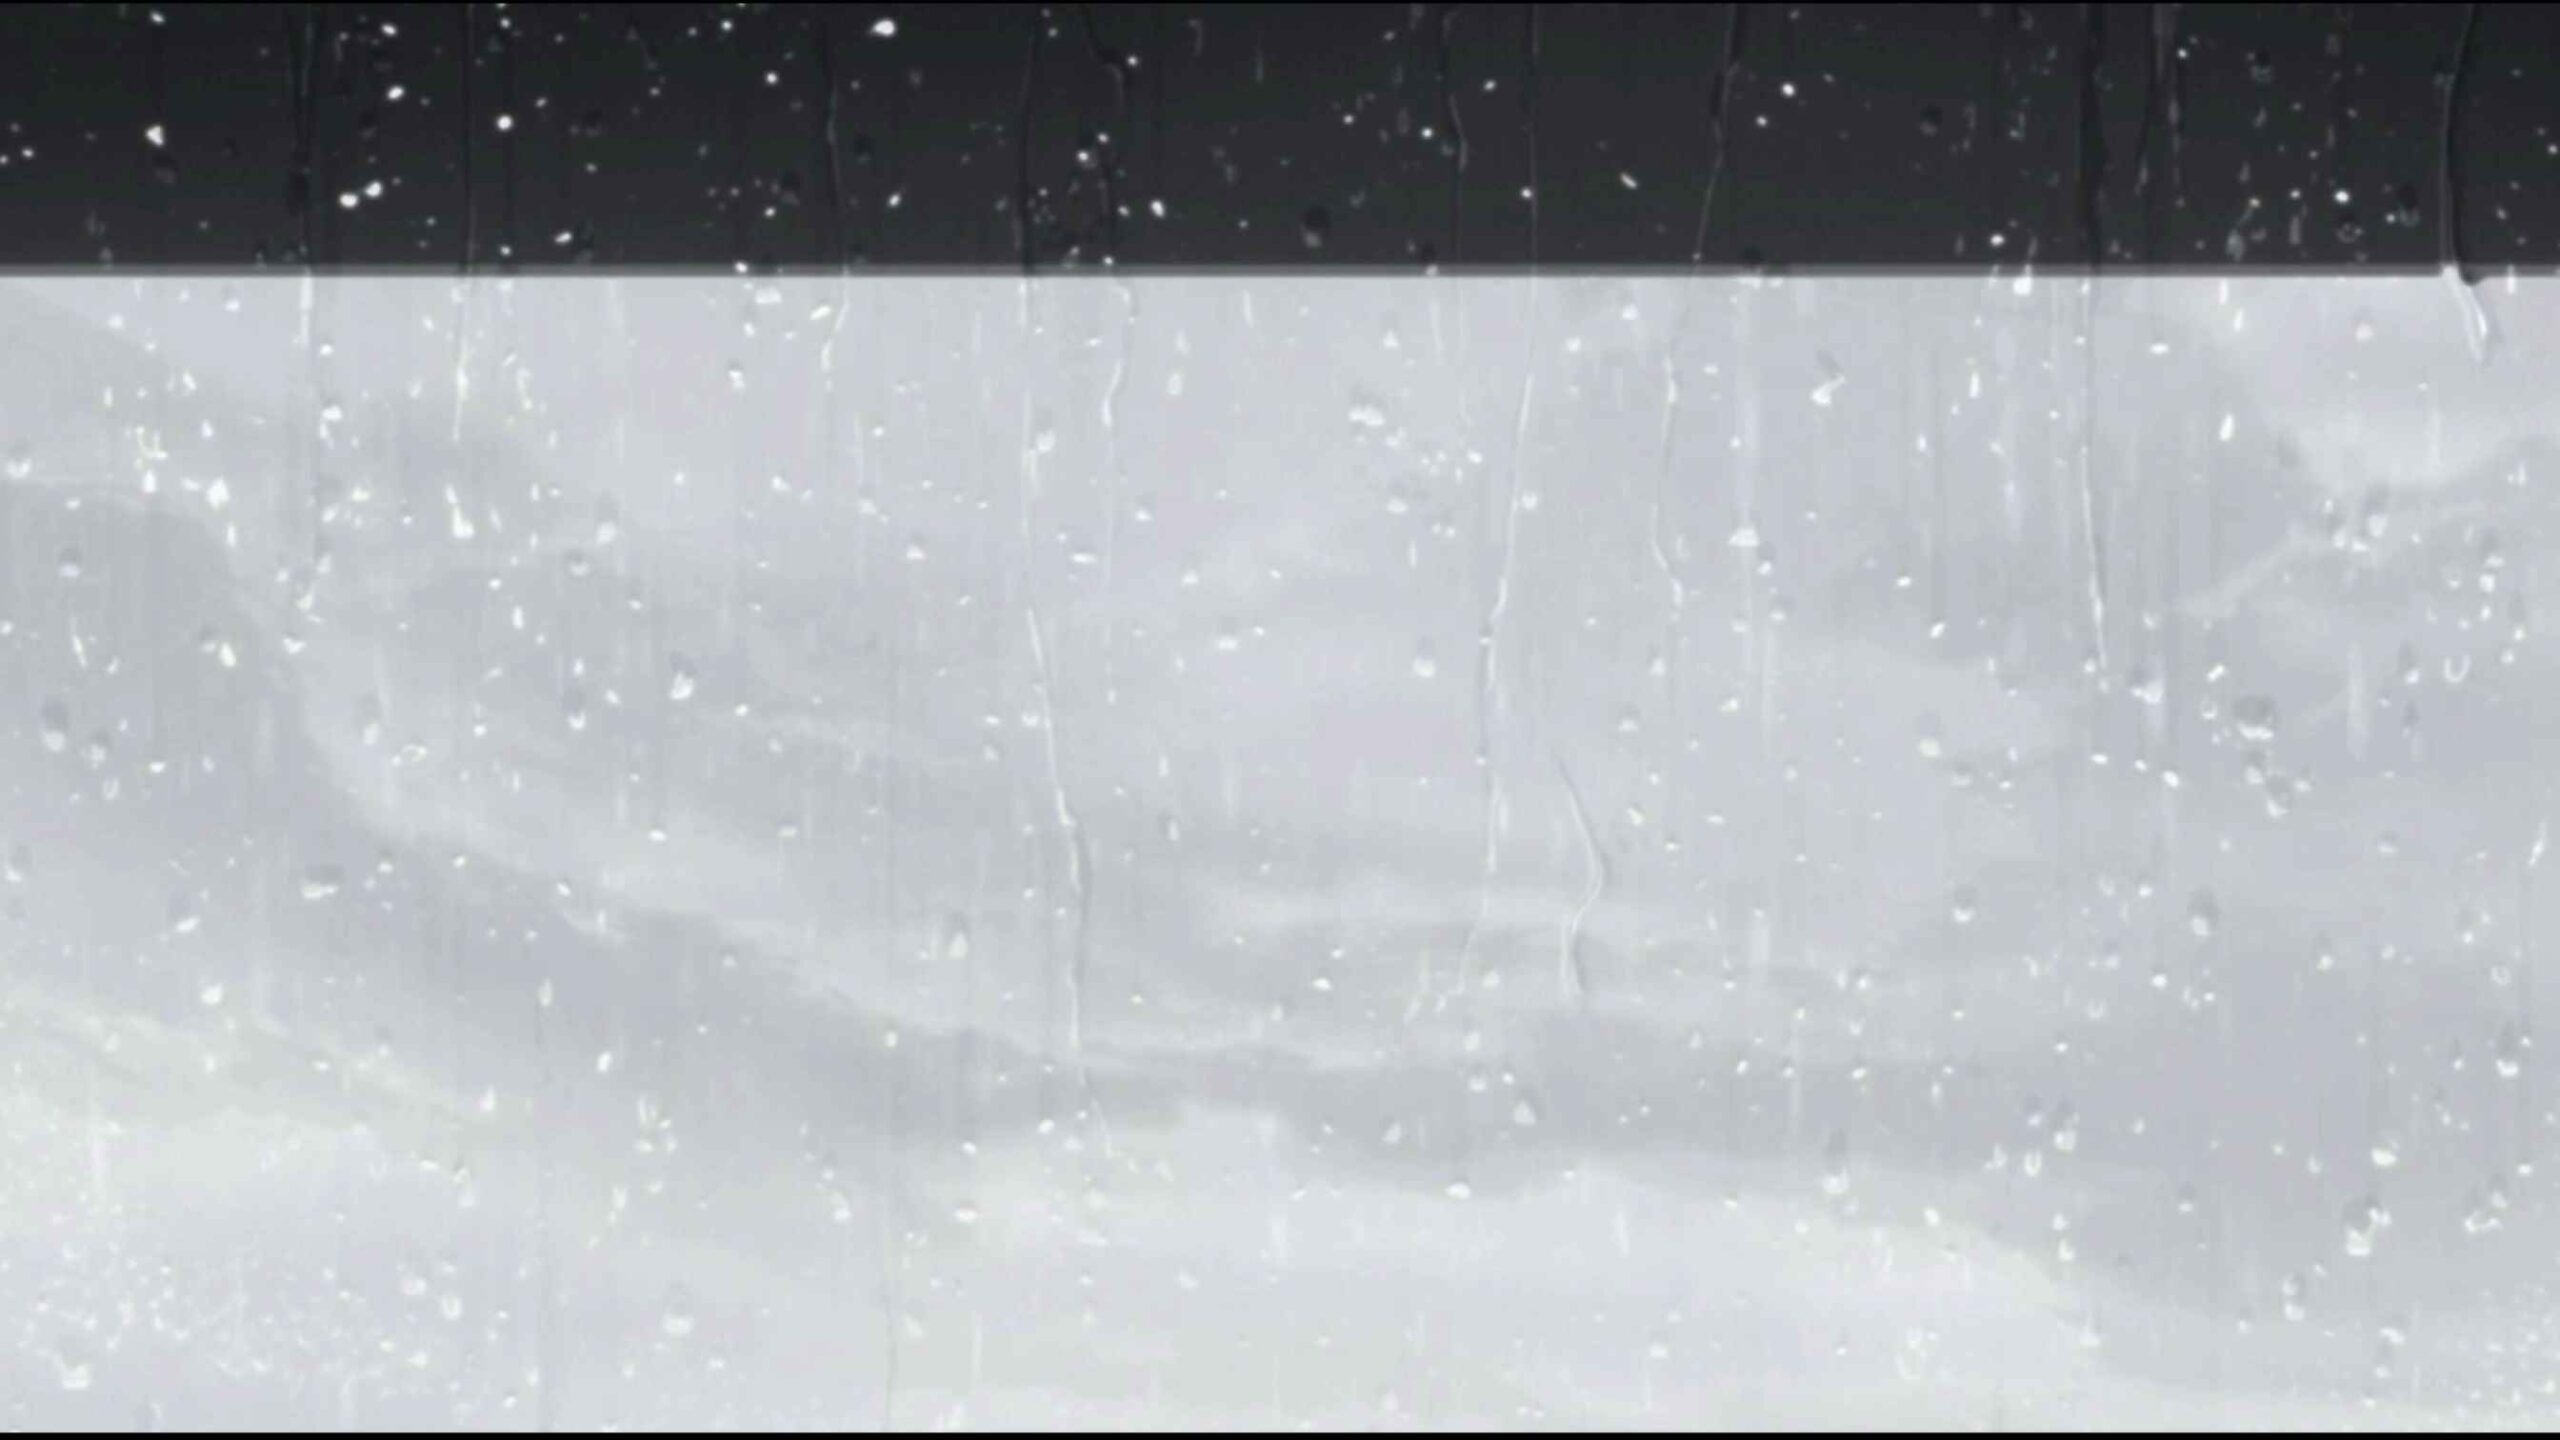 4K Animated Rain on Window Glass Screensaver || Background Free Download || Rain Sounds White Noise